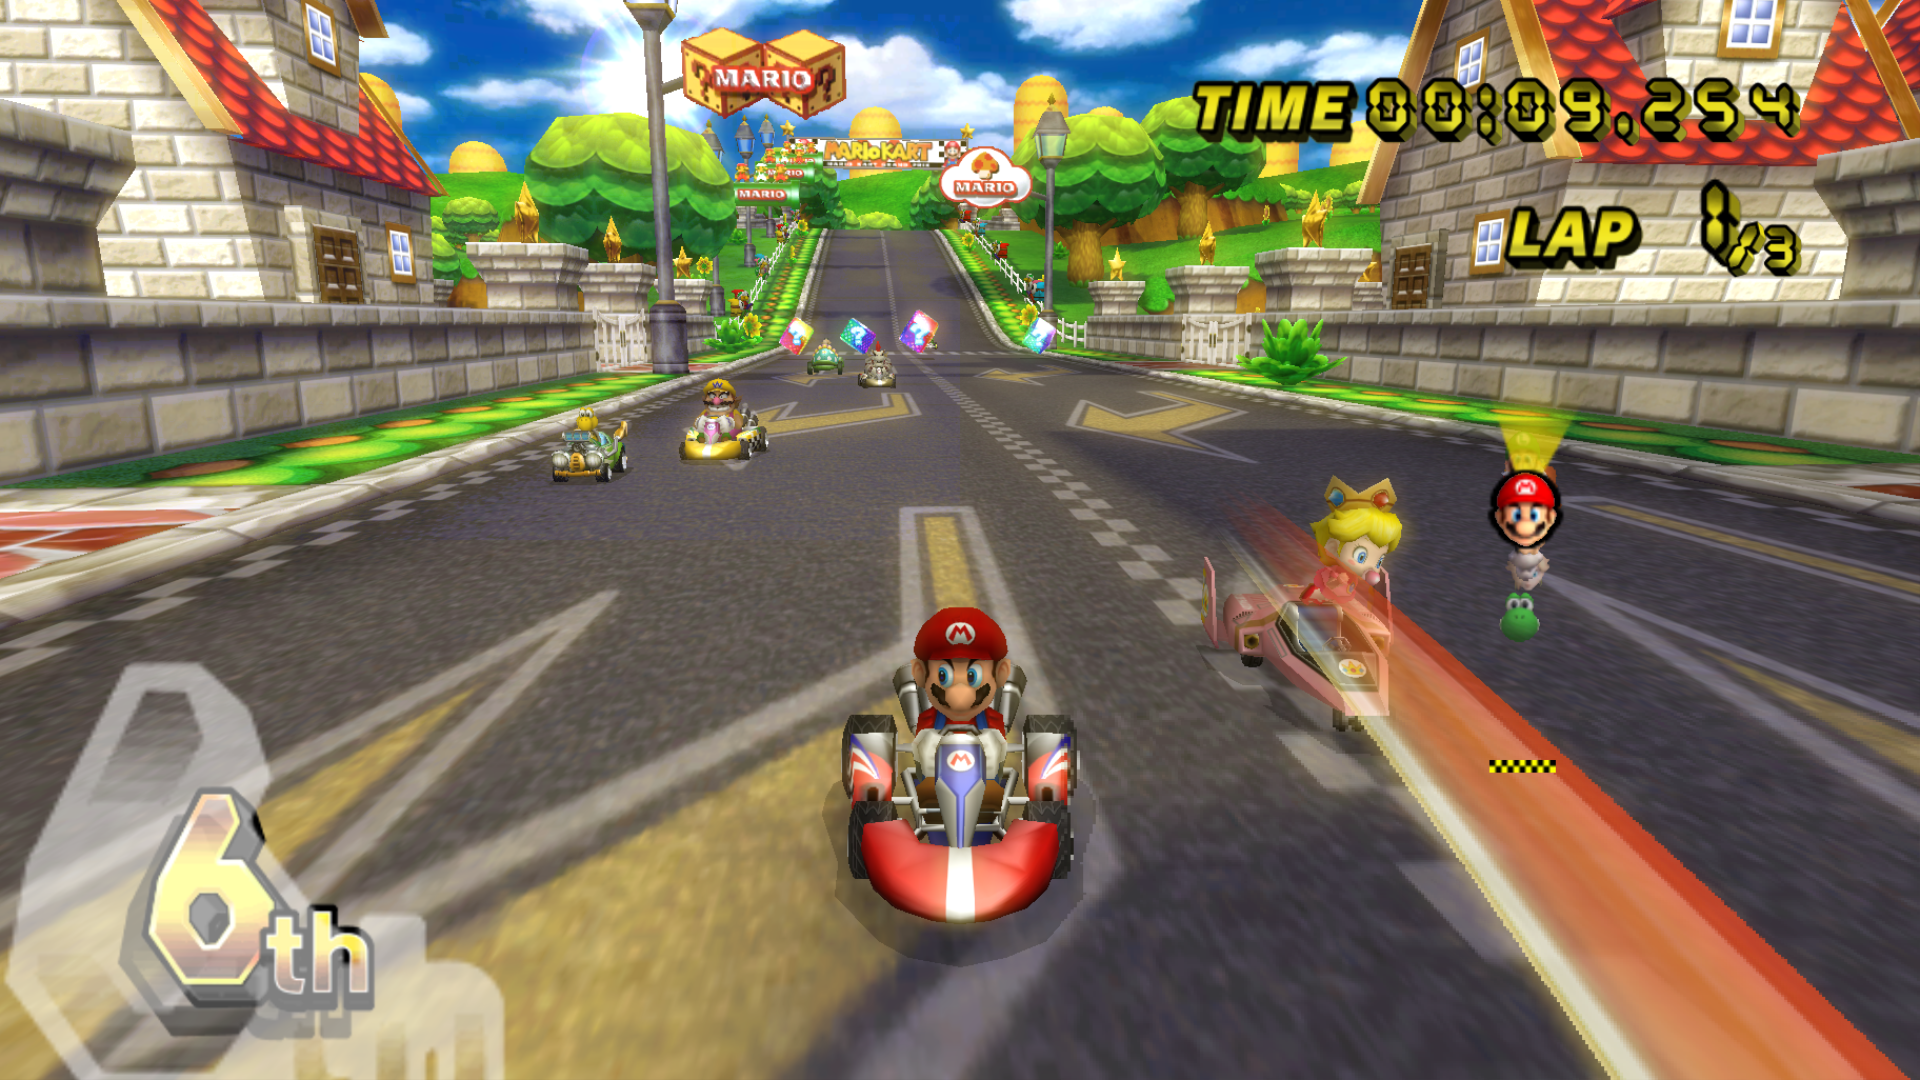 Video Game Mario Kart Wii 1920x1080